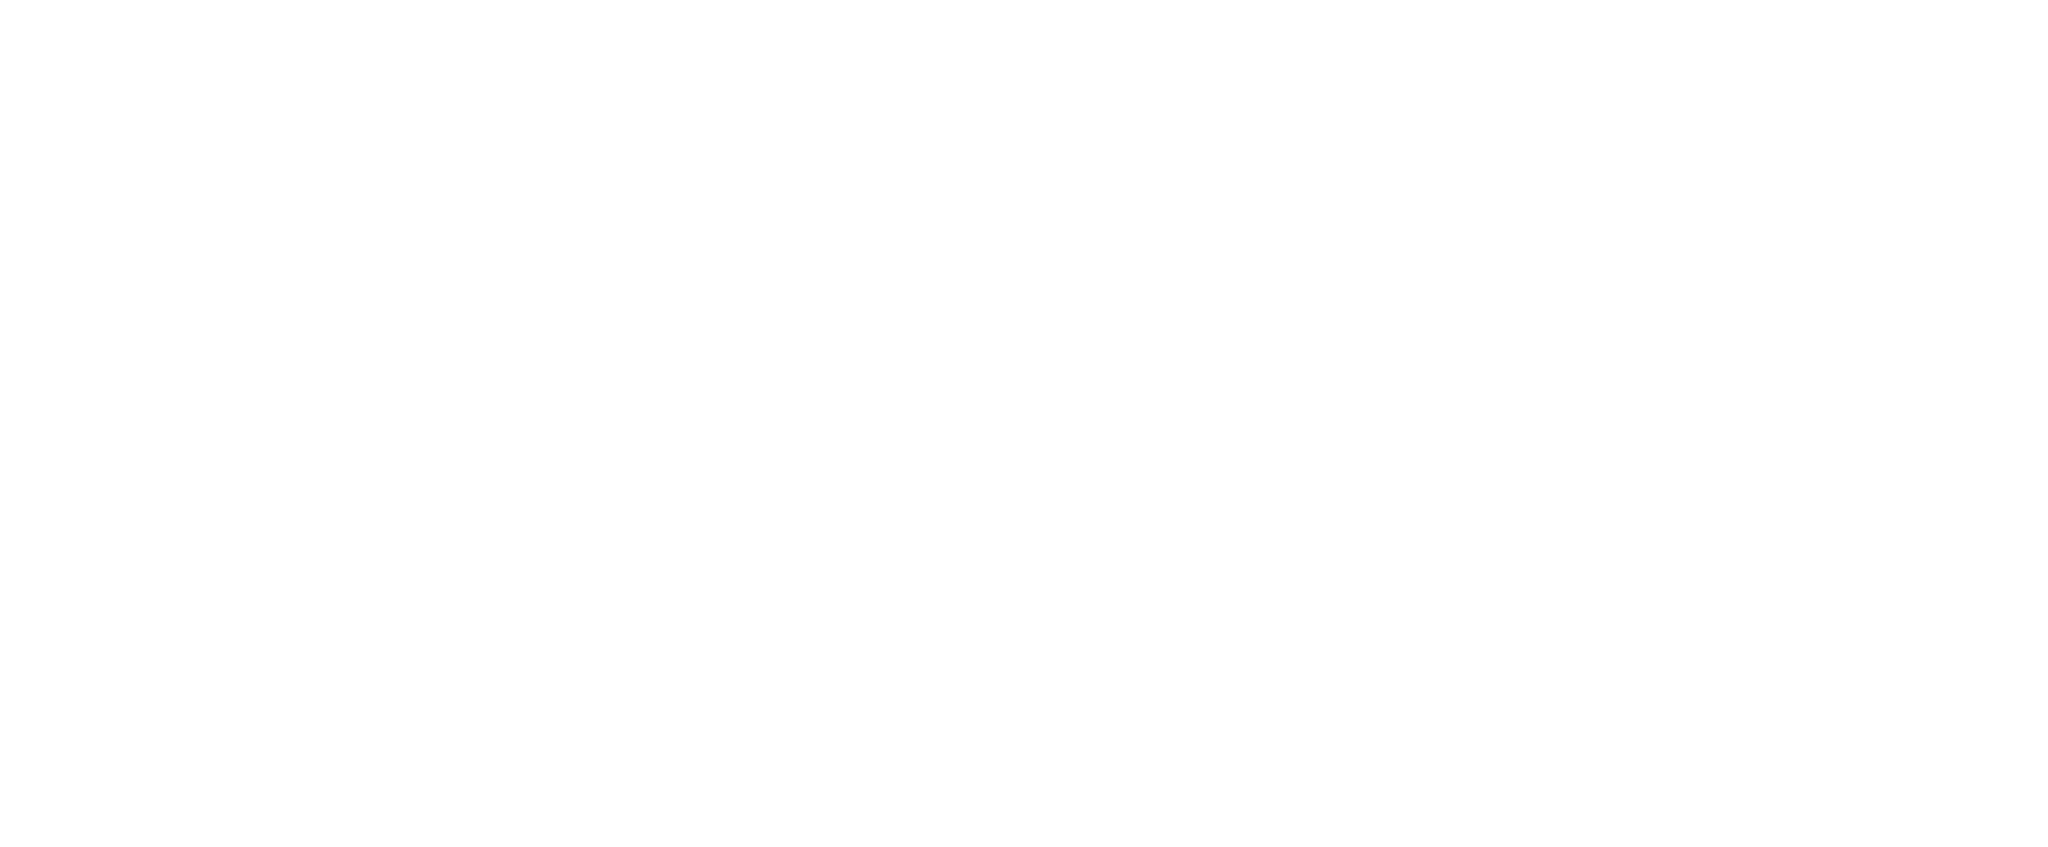 Apex Roofing - Spokane Roofers